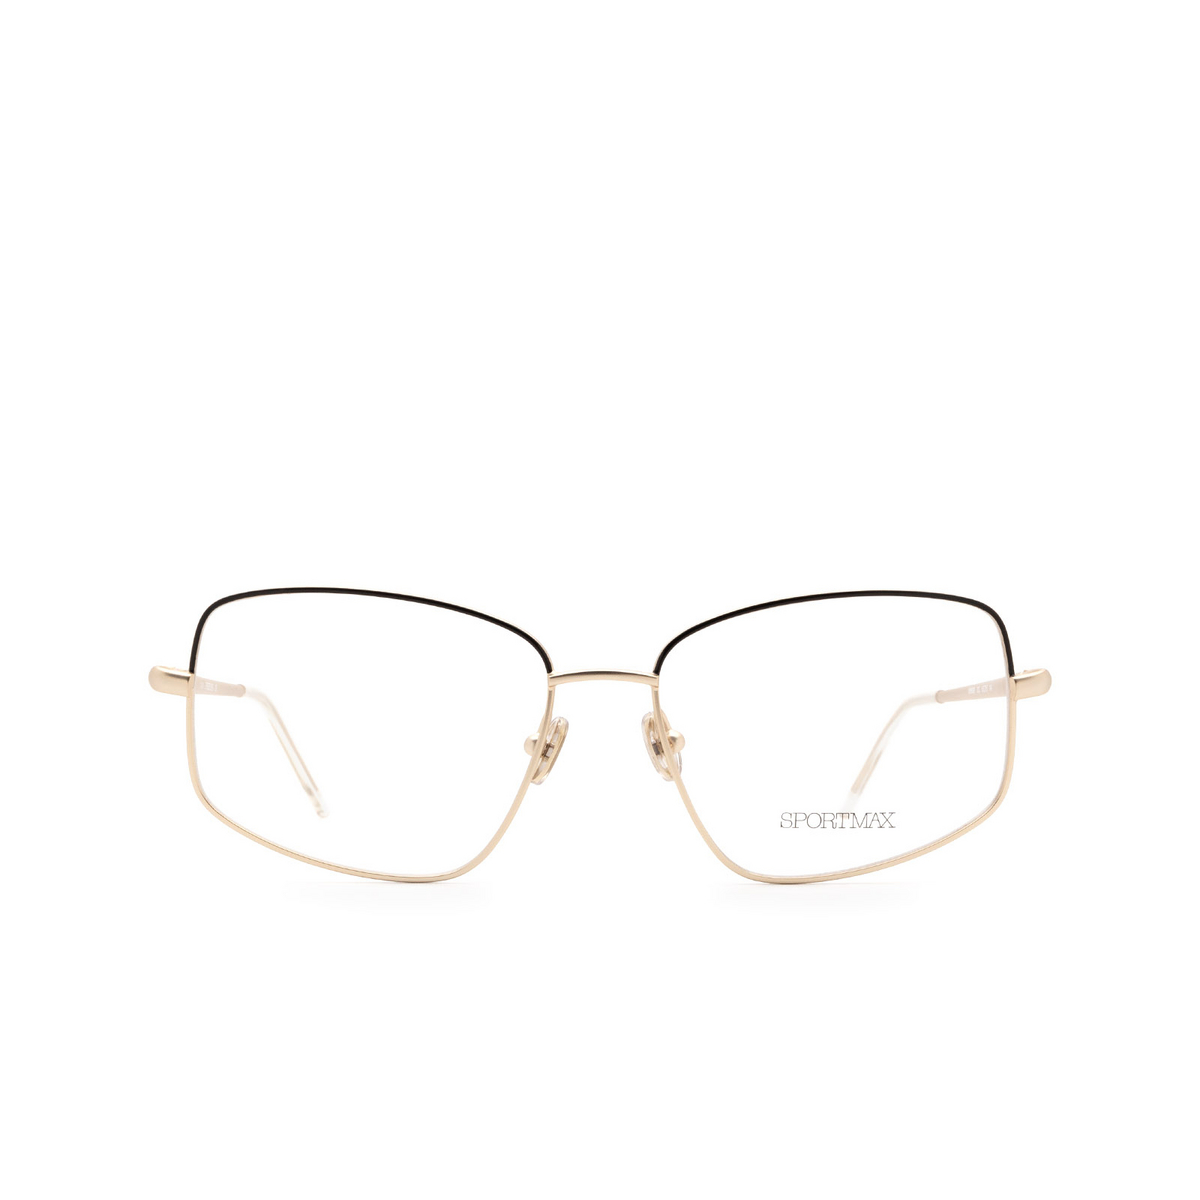 Sportmax® Square Eyeglasses: SM5008 color 032 Light Gold - front view